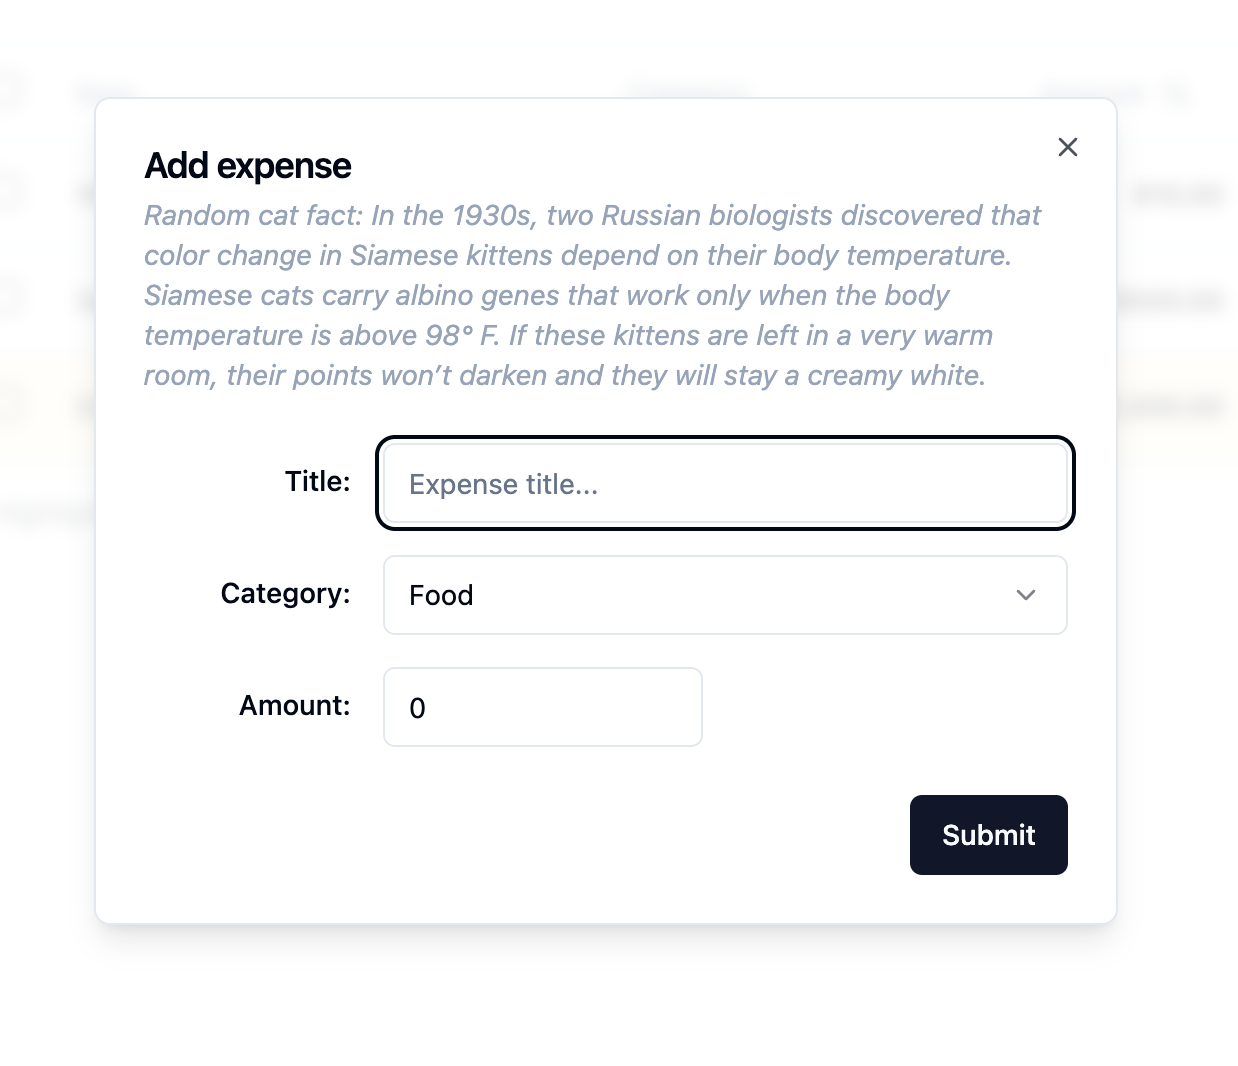 Add expense form screenshot